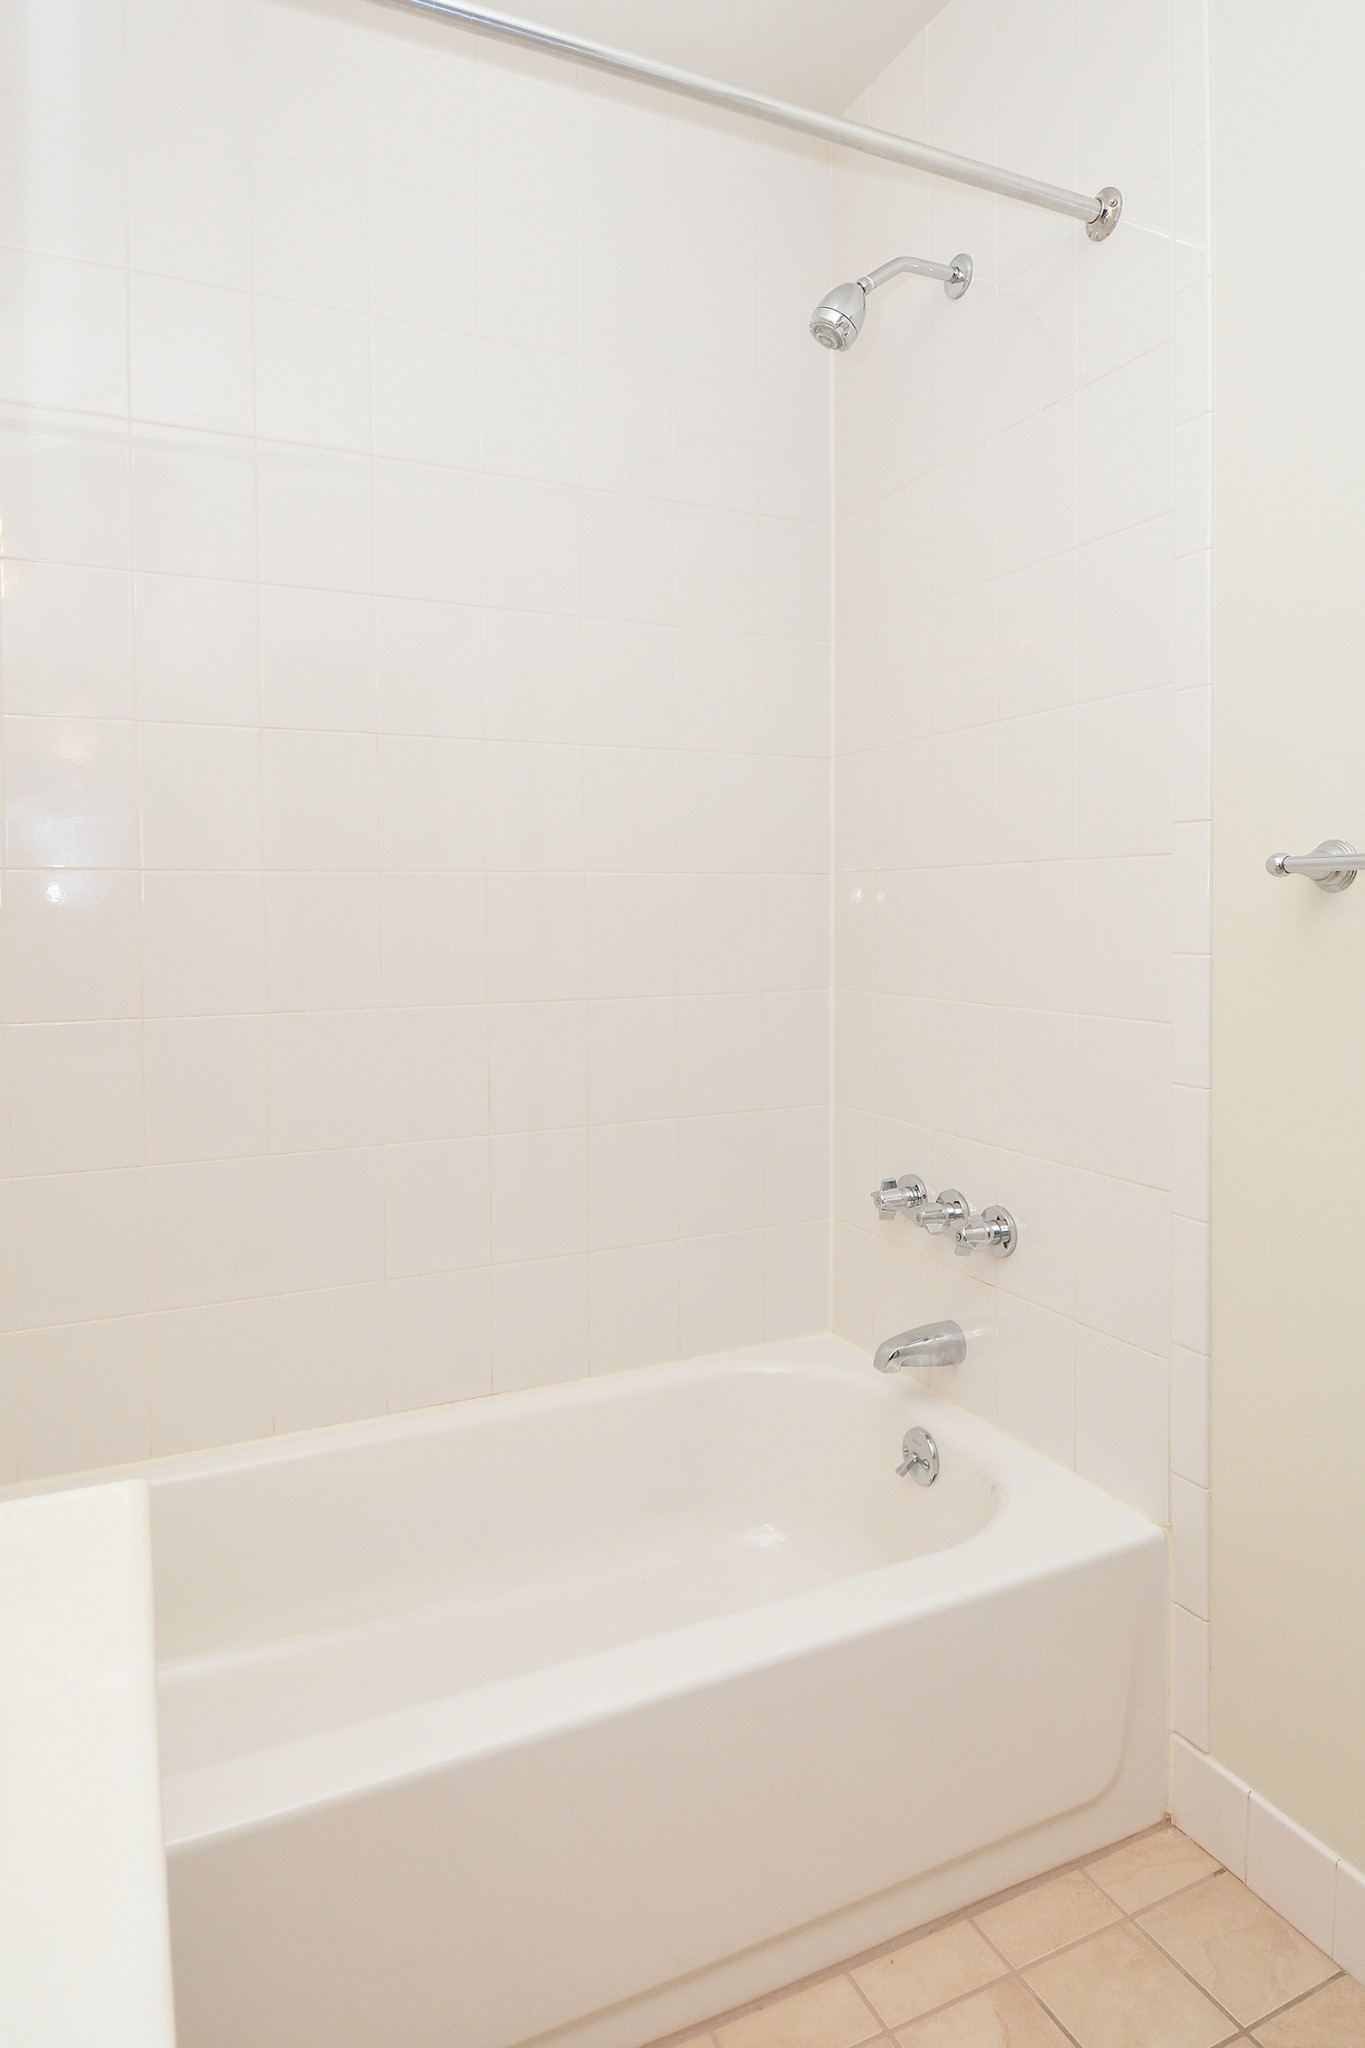 Bathtub in a bathroom of an apartment at Newport Village Apartments.